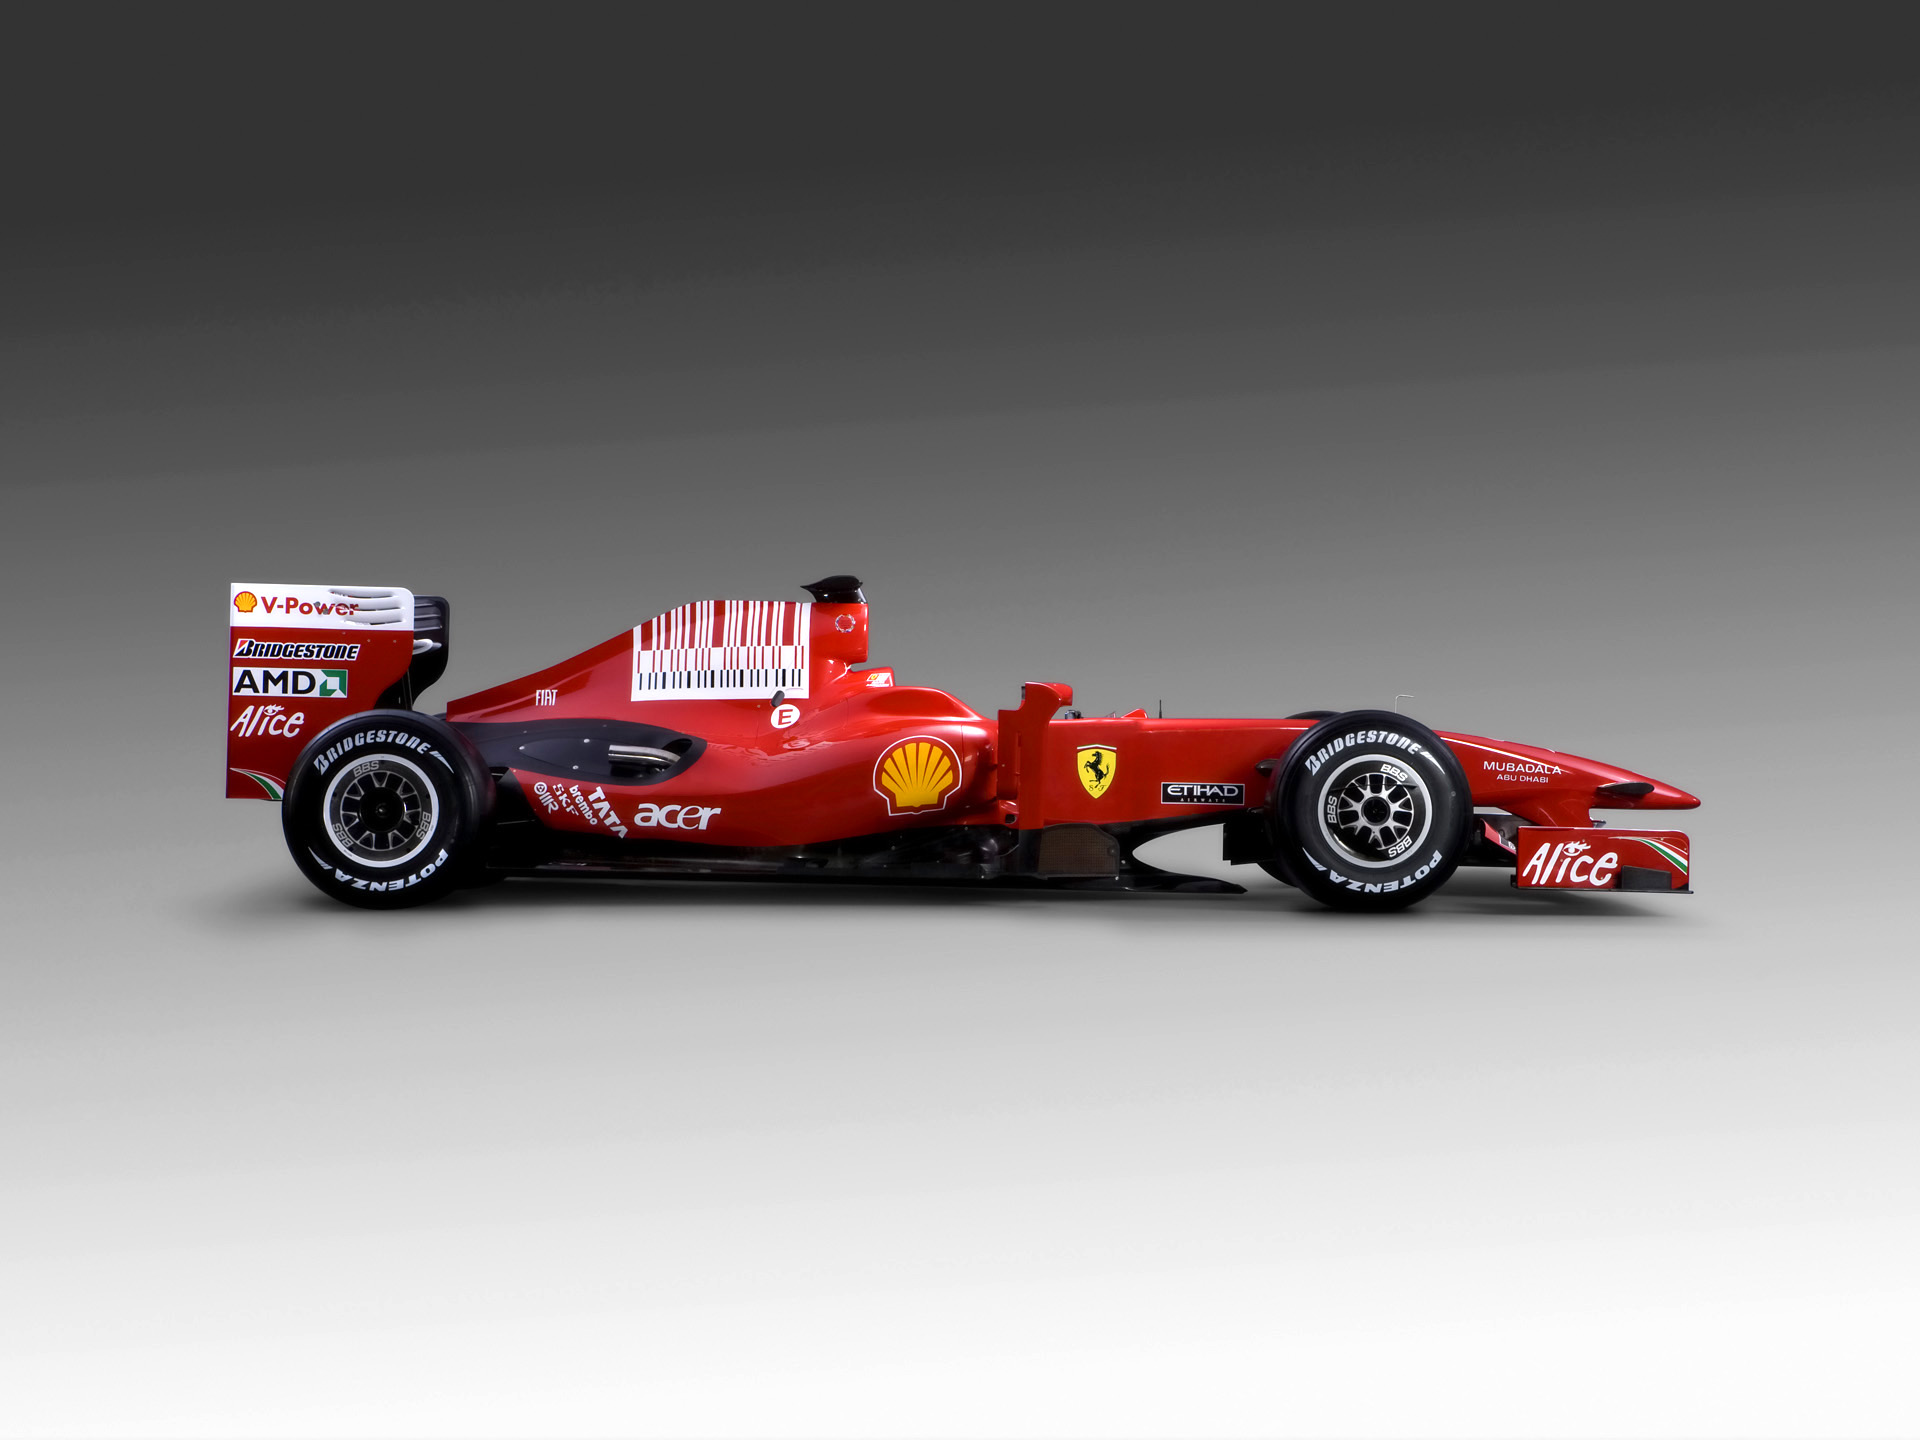  2009 Ferrari F60 Wallpaper.